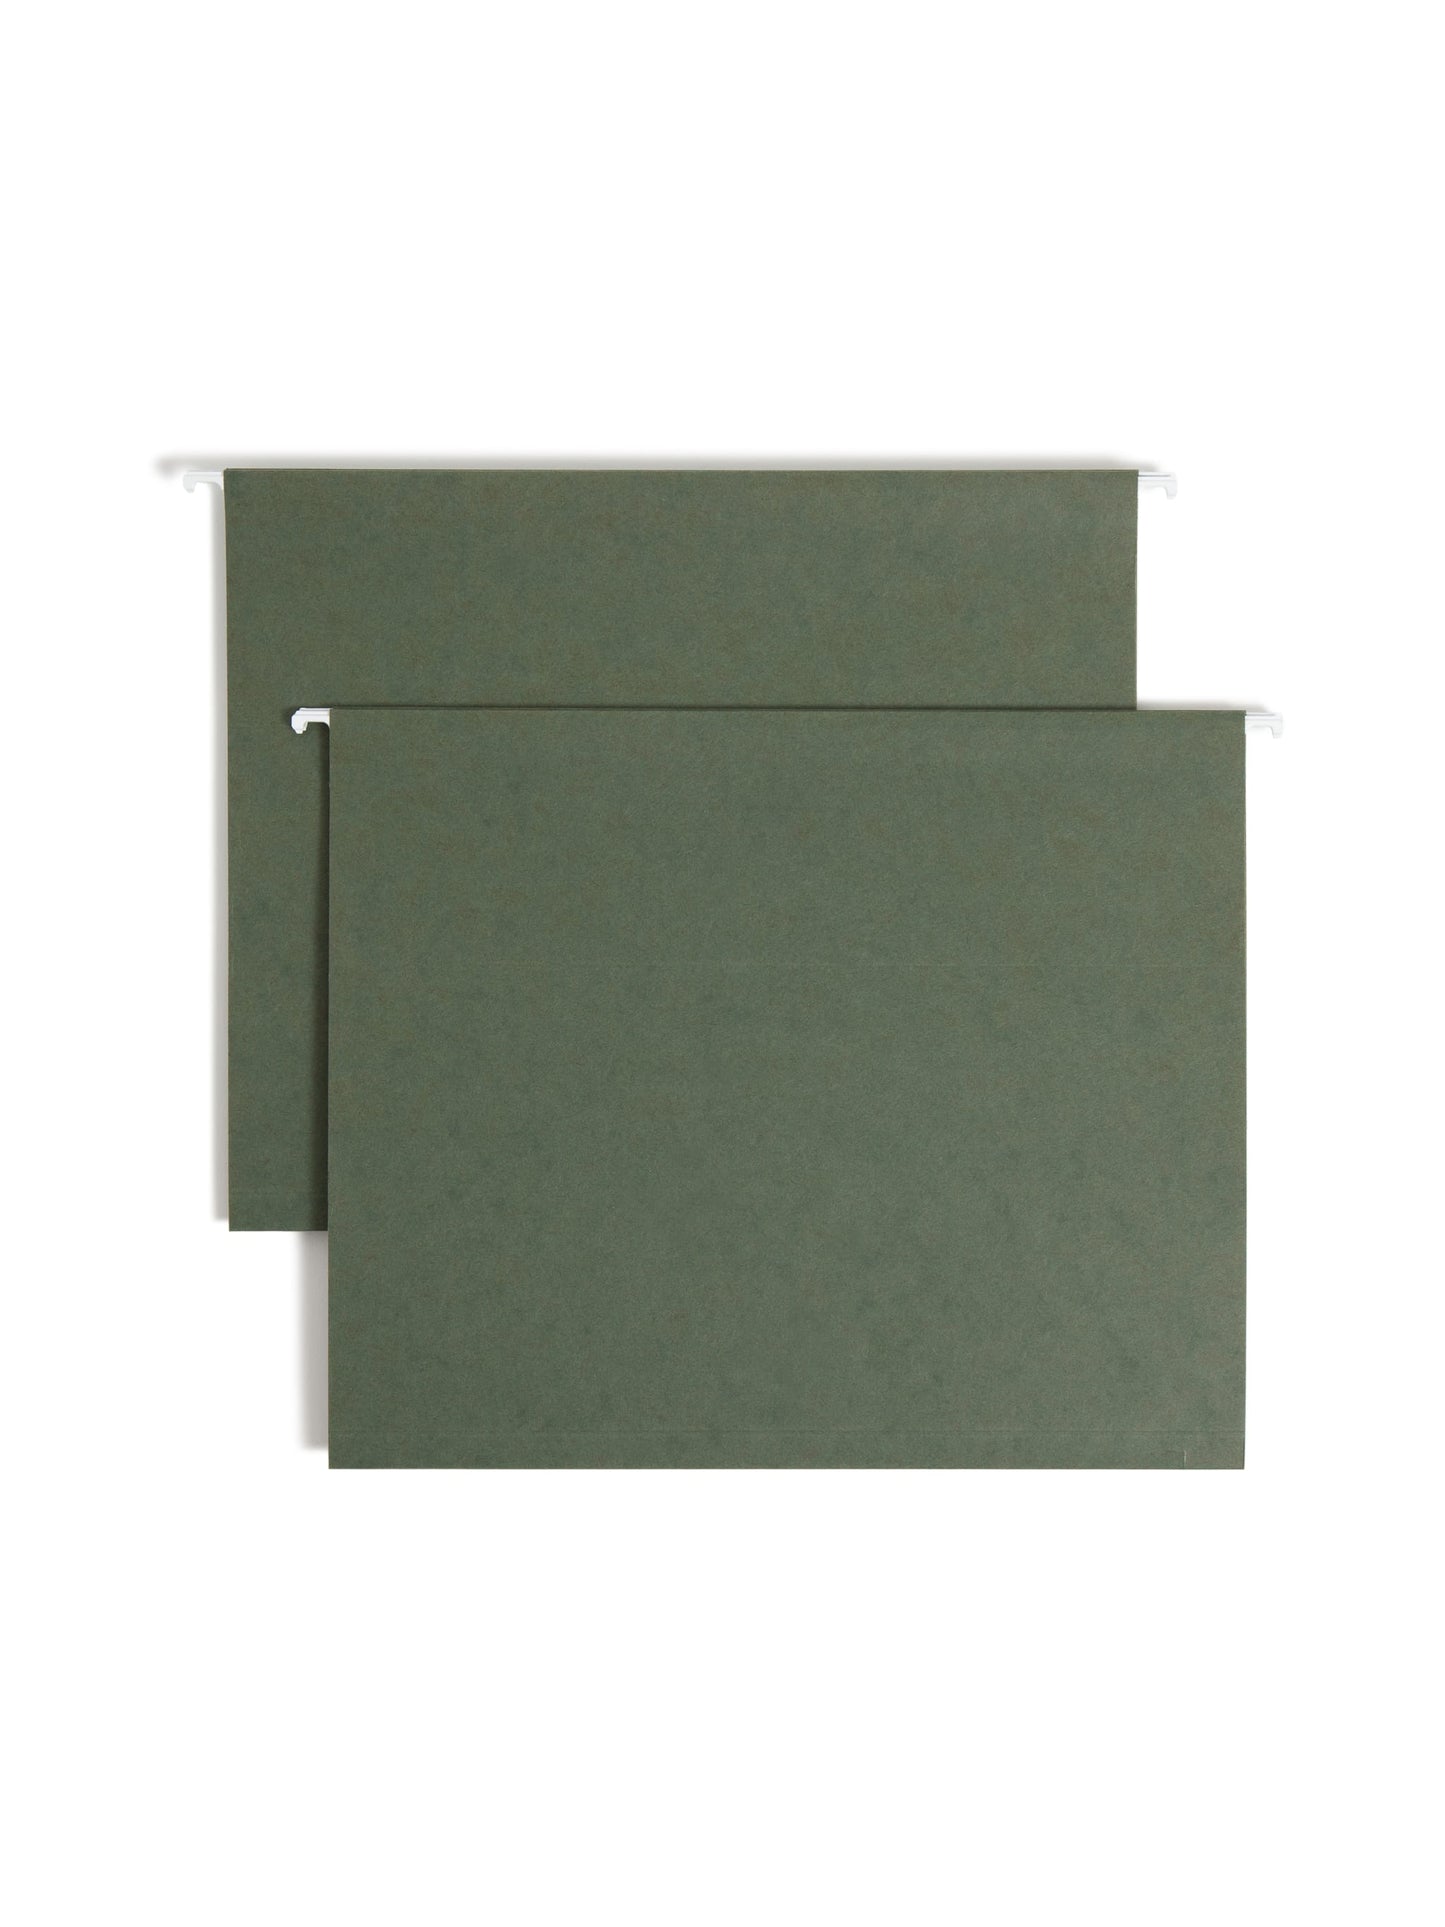 Hanging Box Bottom File Folders, 1 inch Expansion, Standard Green Color, Letter Size, Set of 25, 086486642392